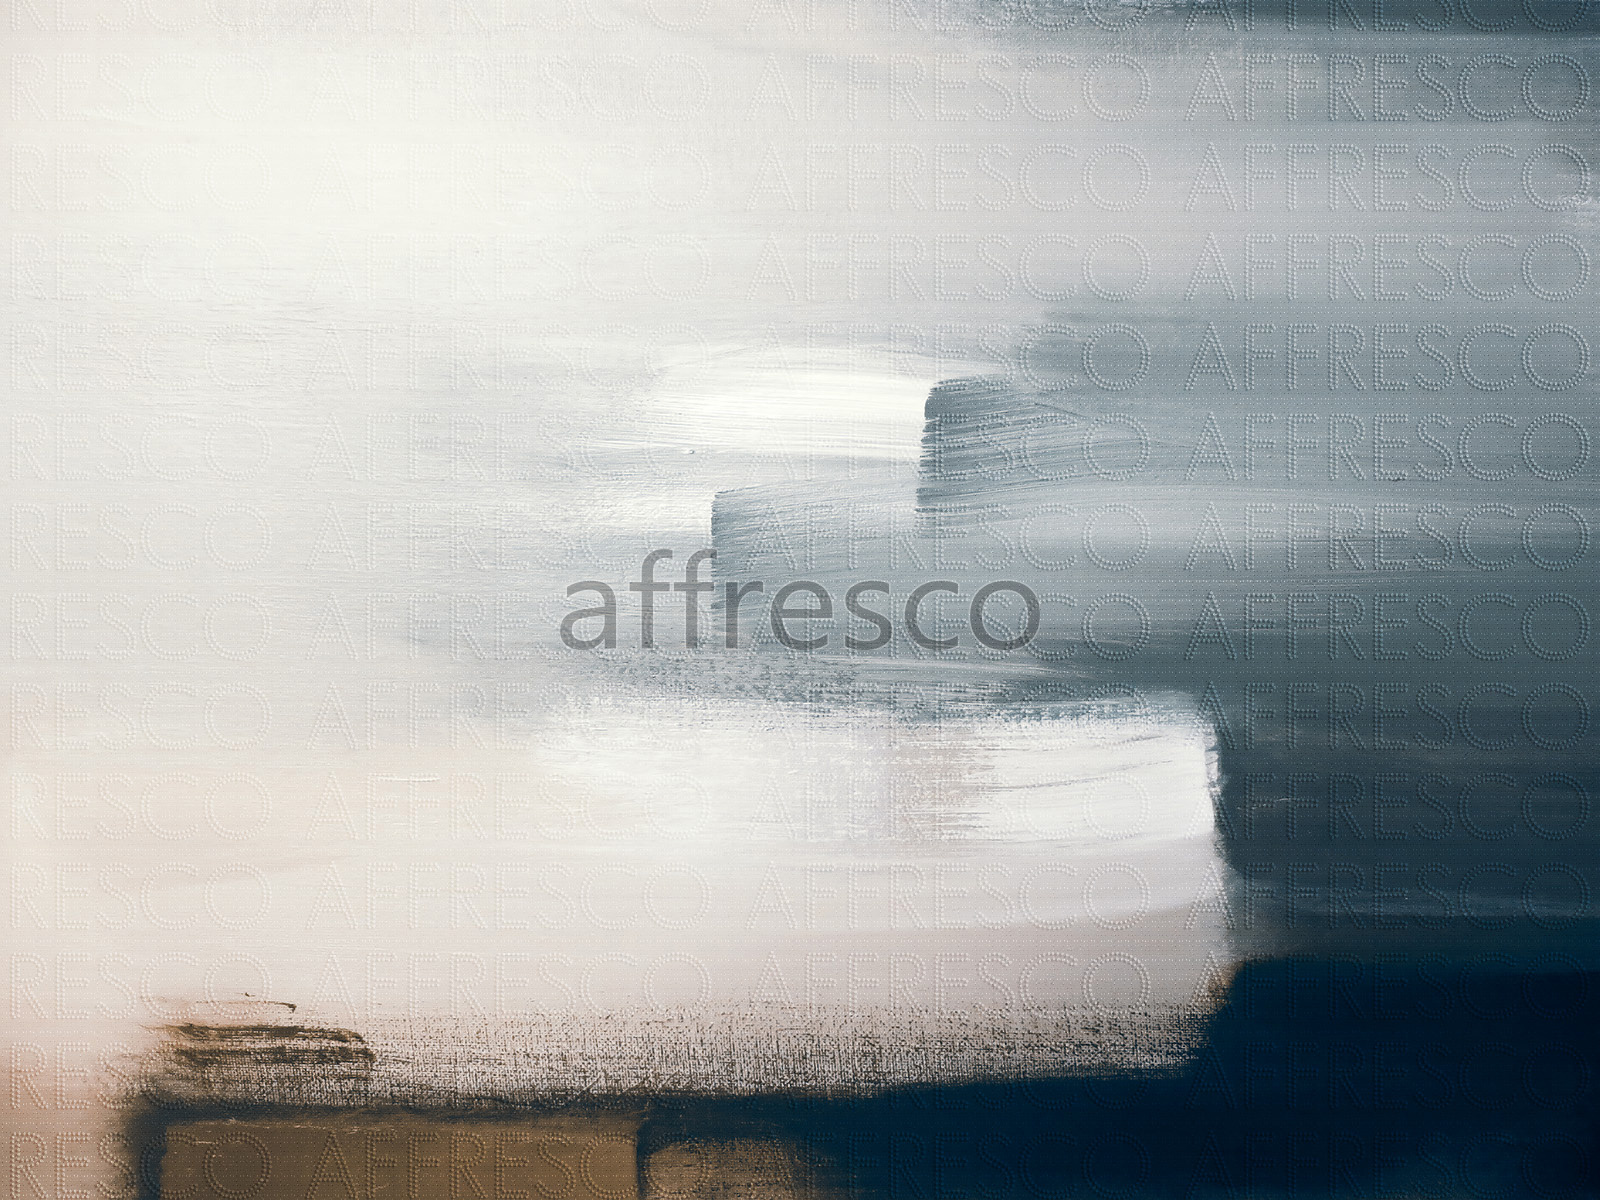 RE810-COL2 | Fine Art | Affresco Factory